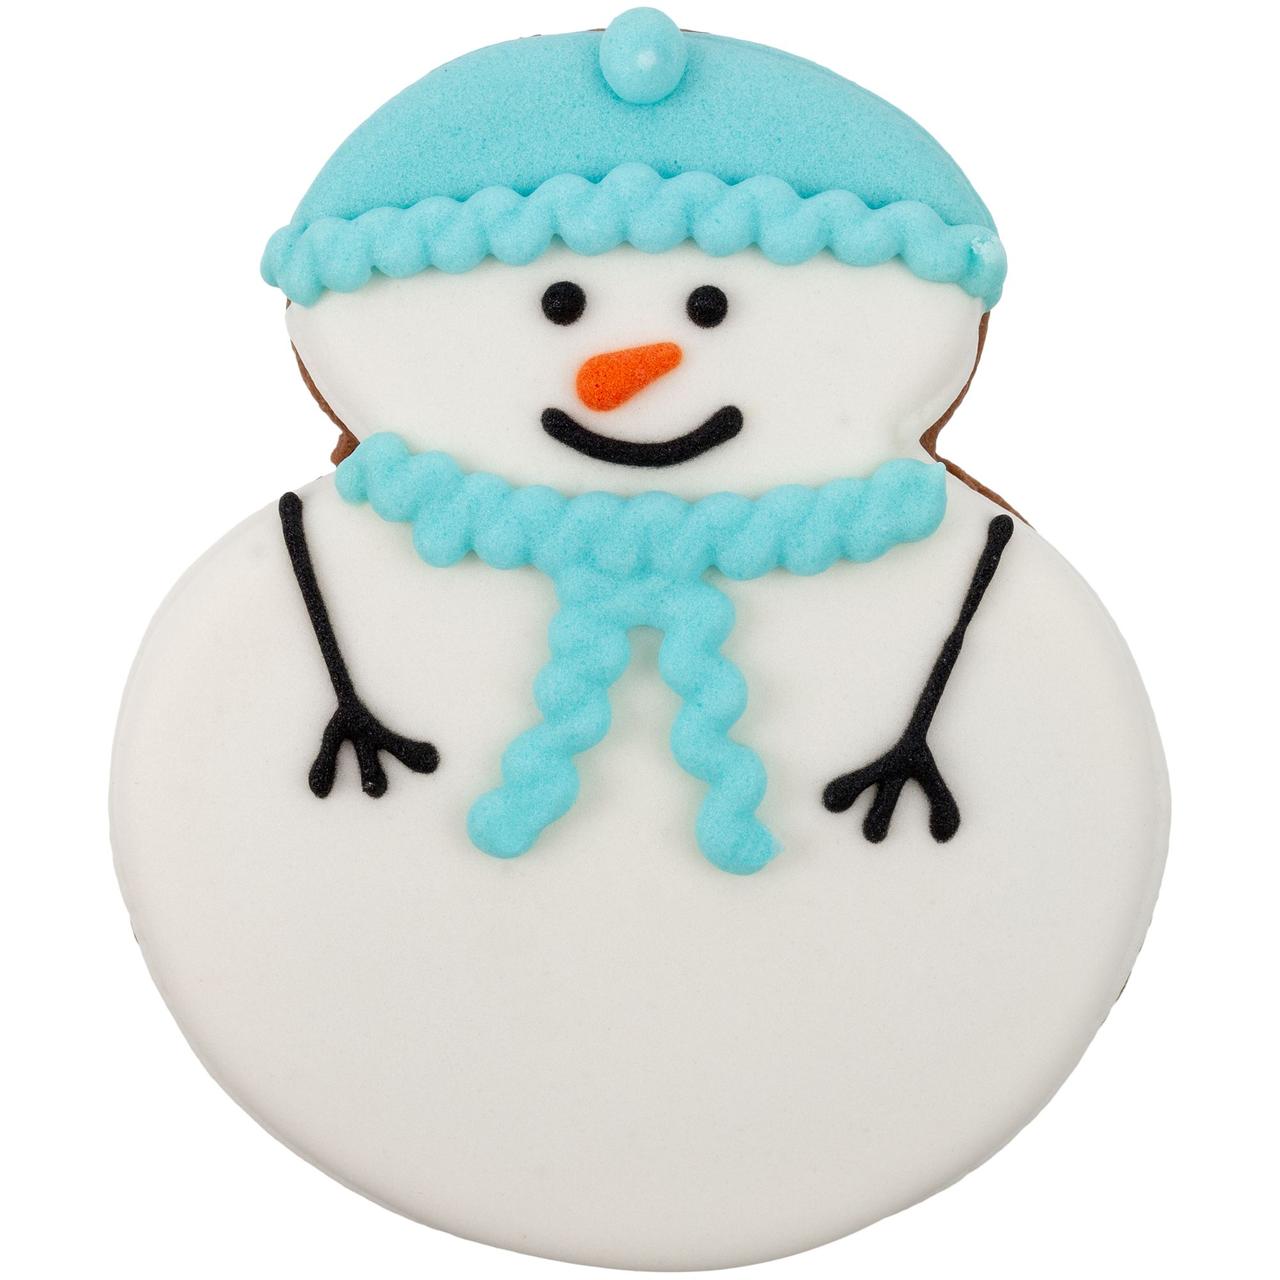 Печенье Sweetish Snowman, голубое (артикул 12918.14), фото 1